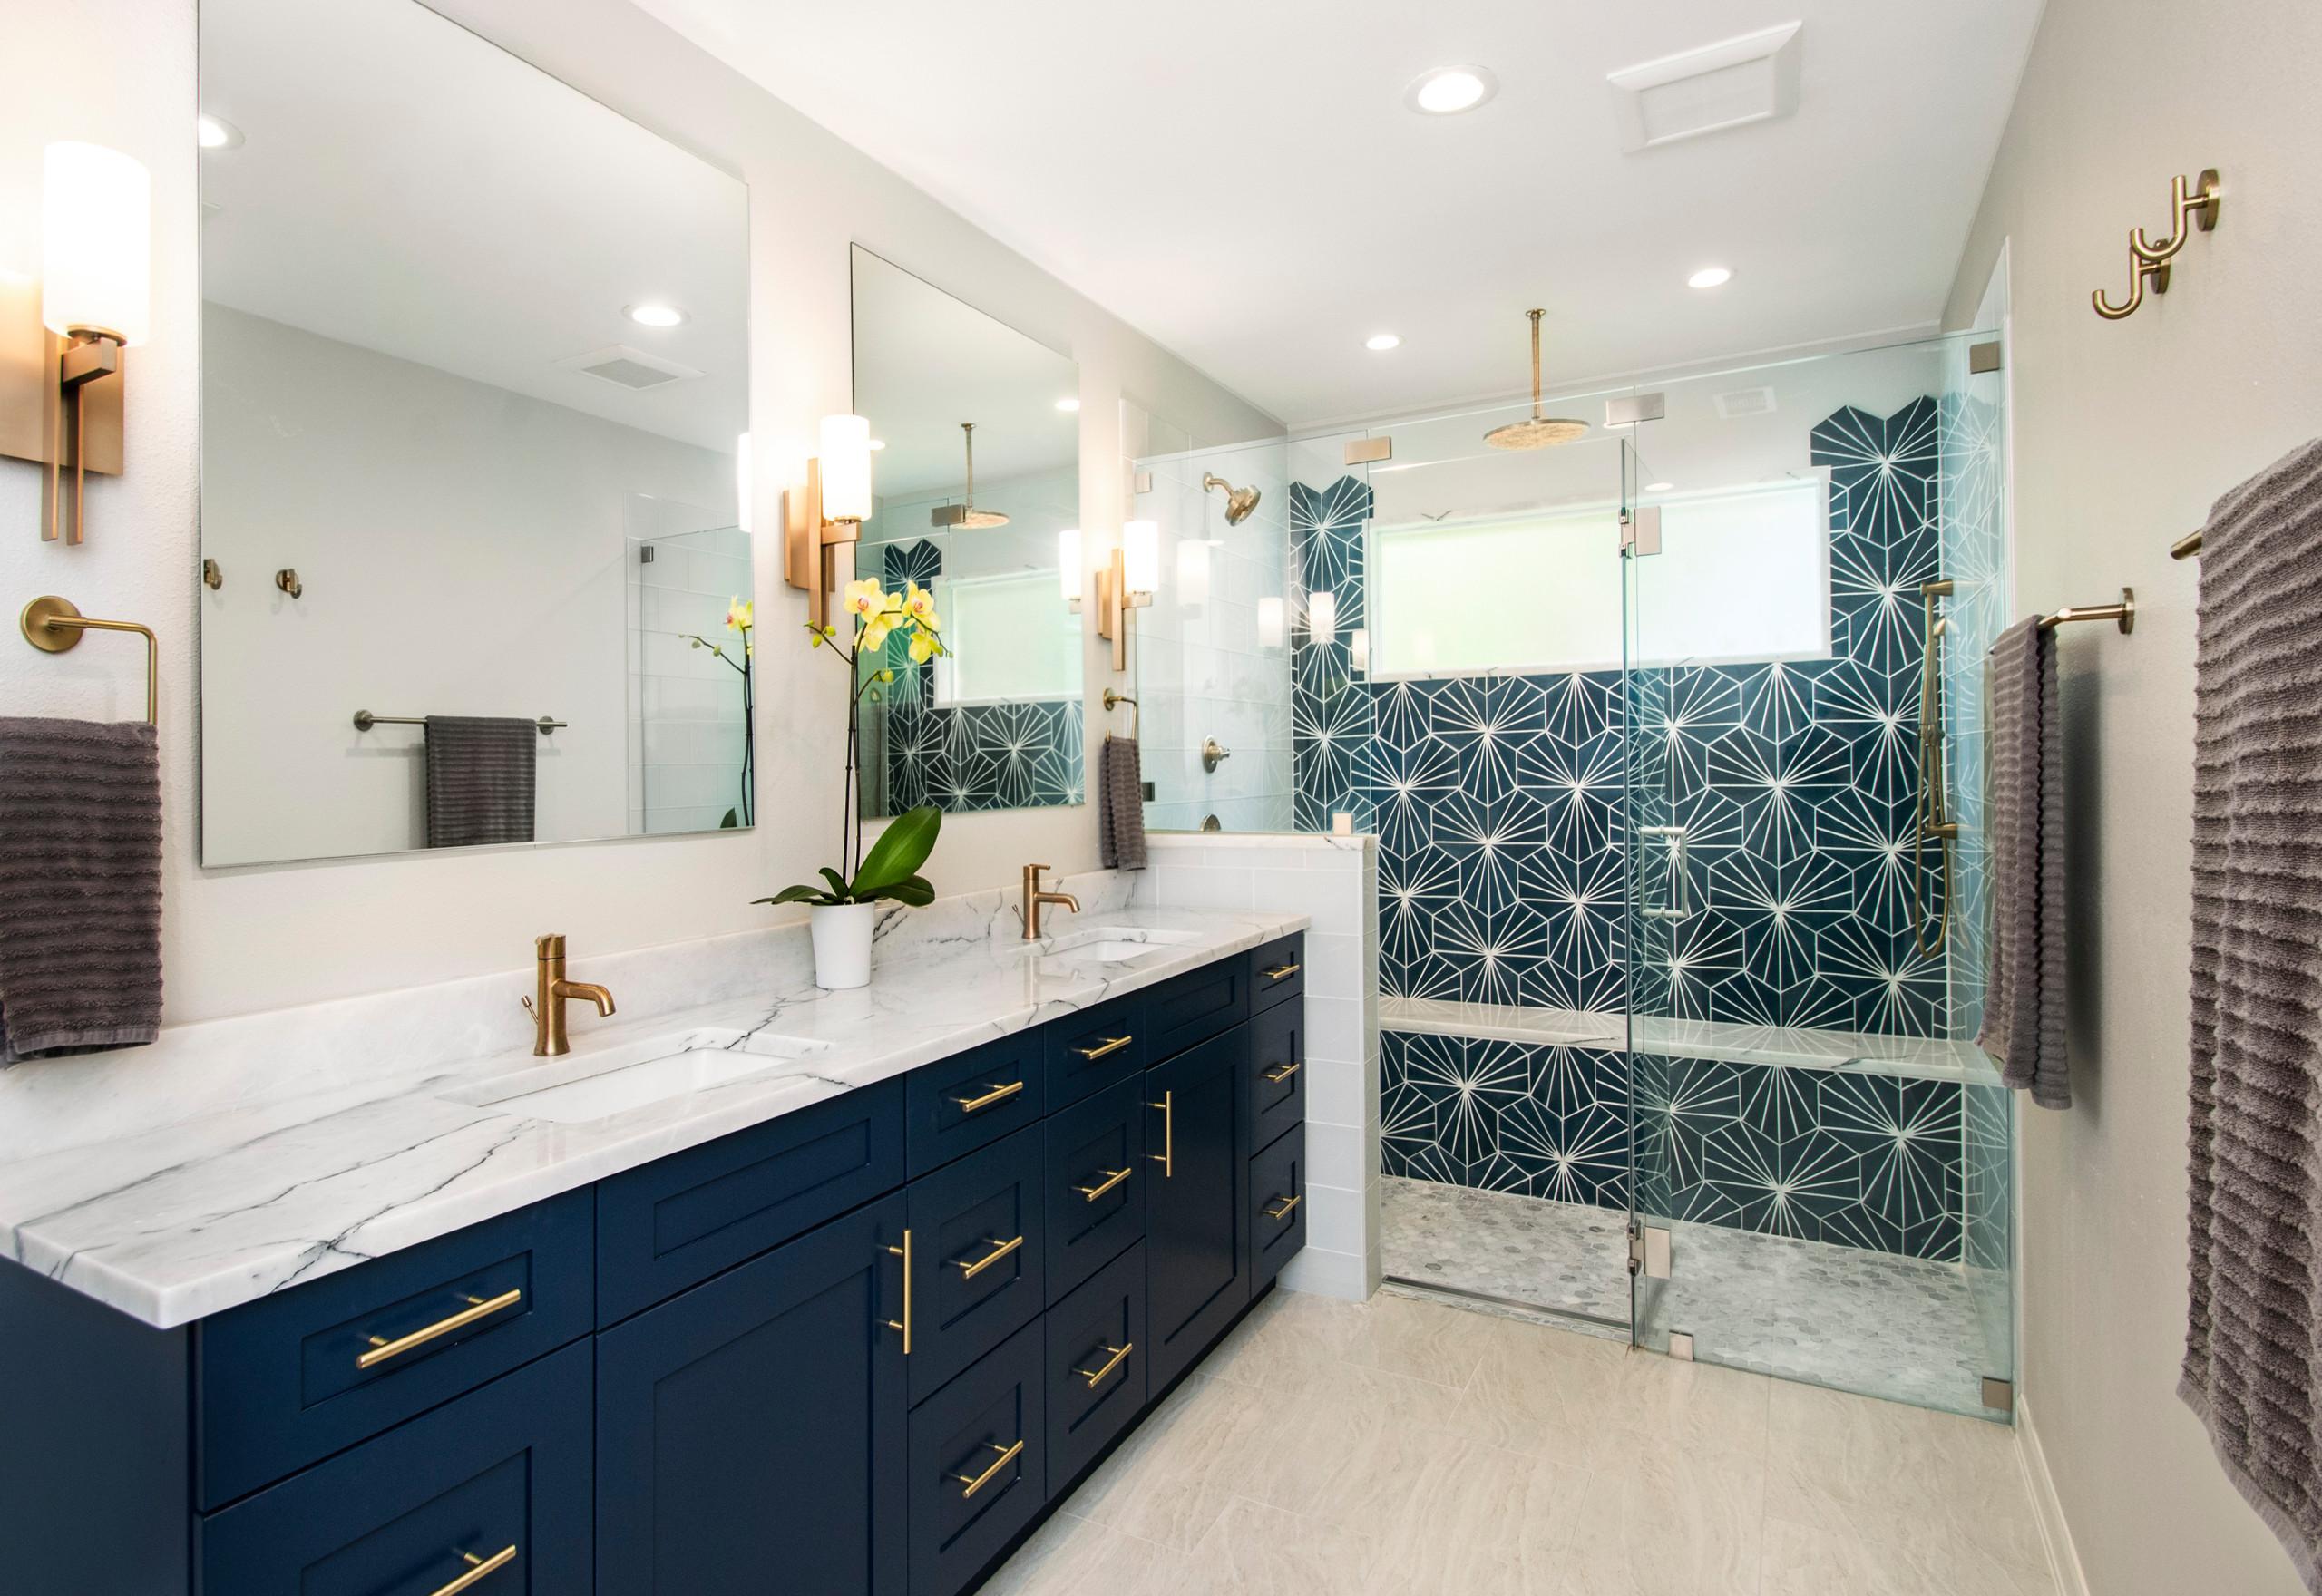 75 Beautiful Blue Tile Bathroom Pictures Ideas Houzz